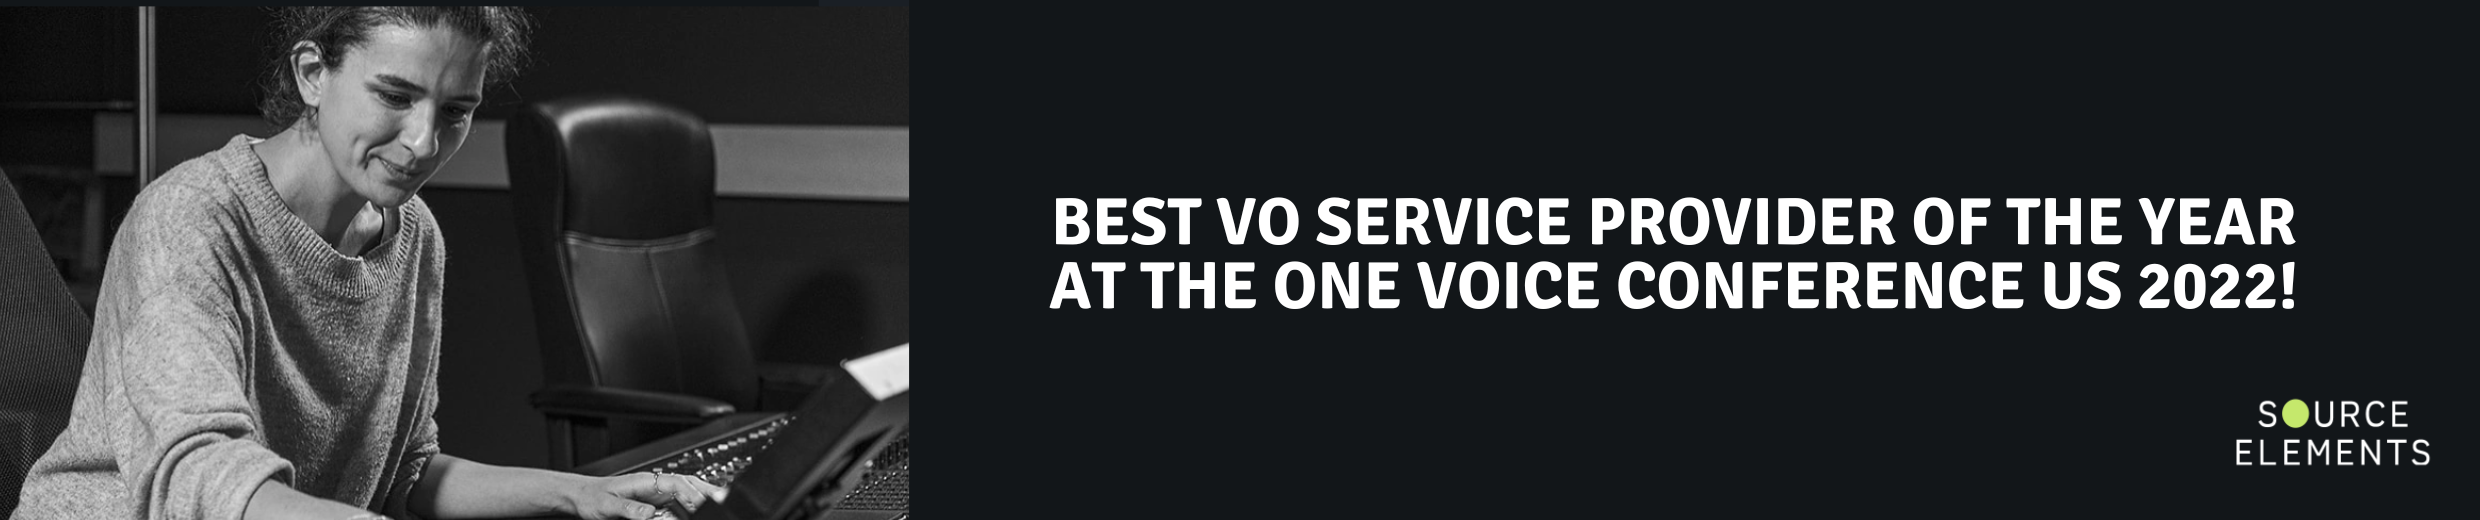 Best VO Service Provider